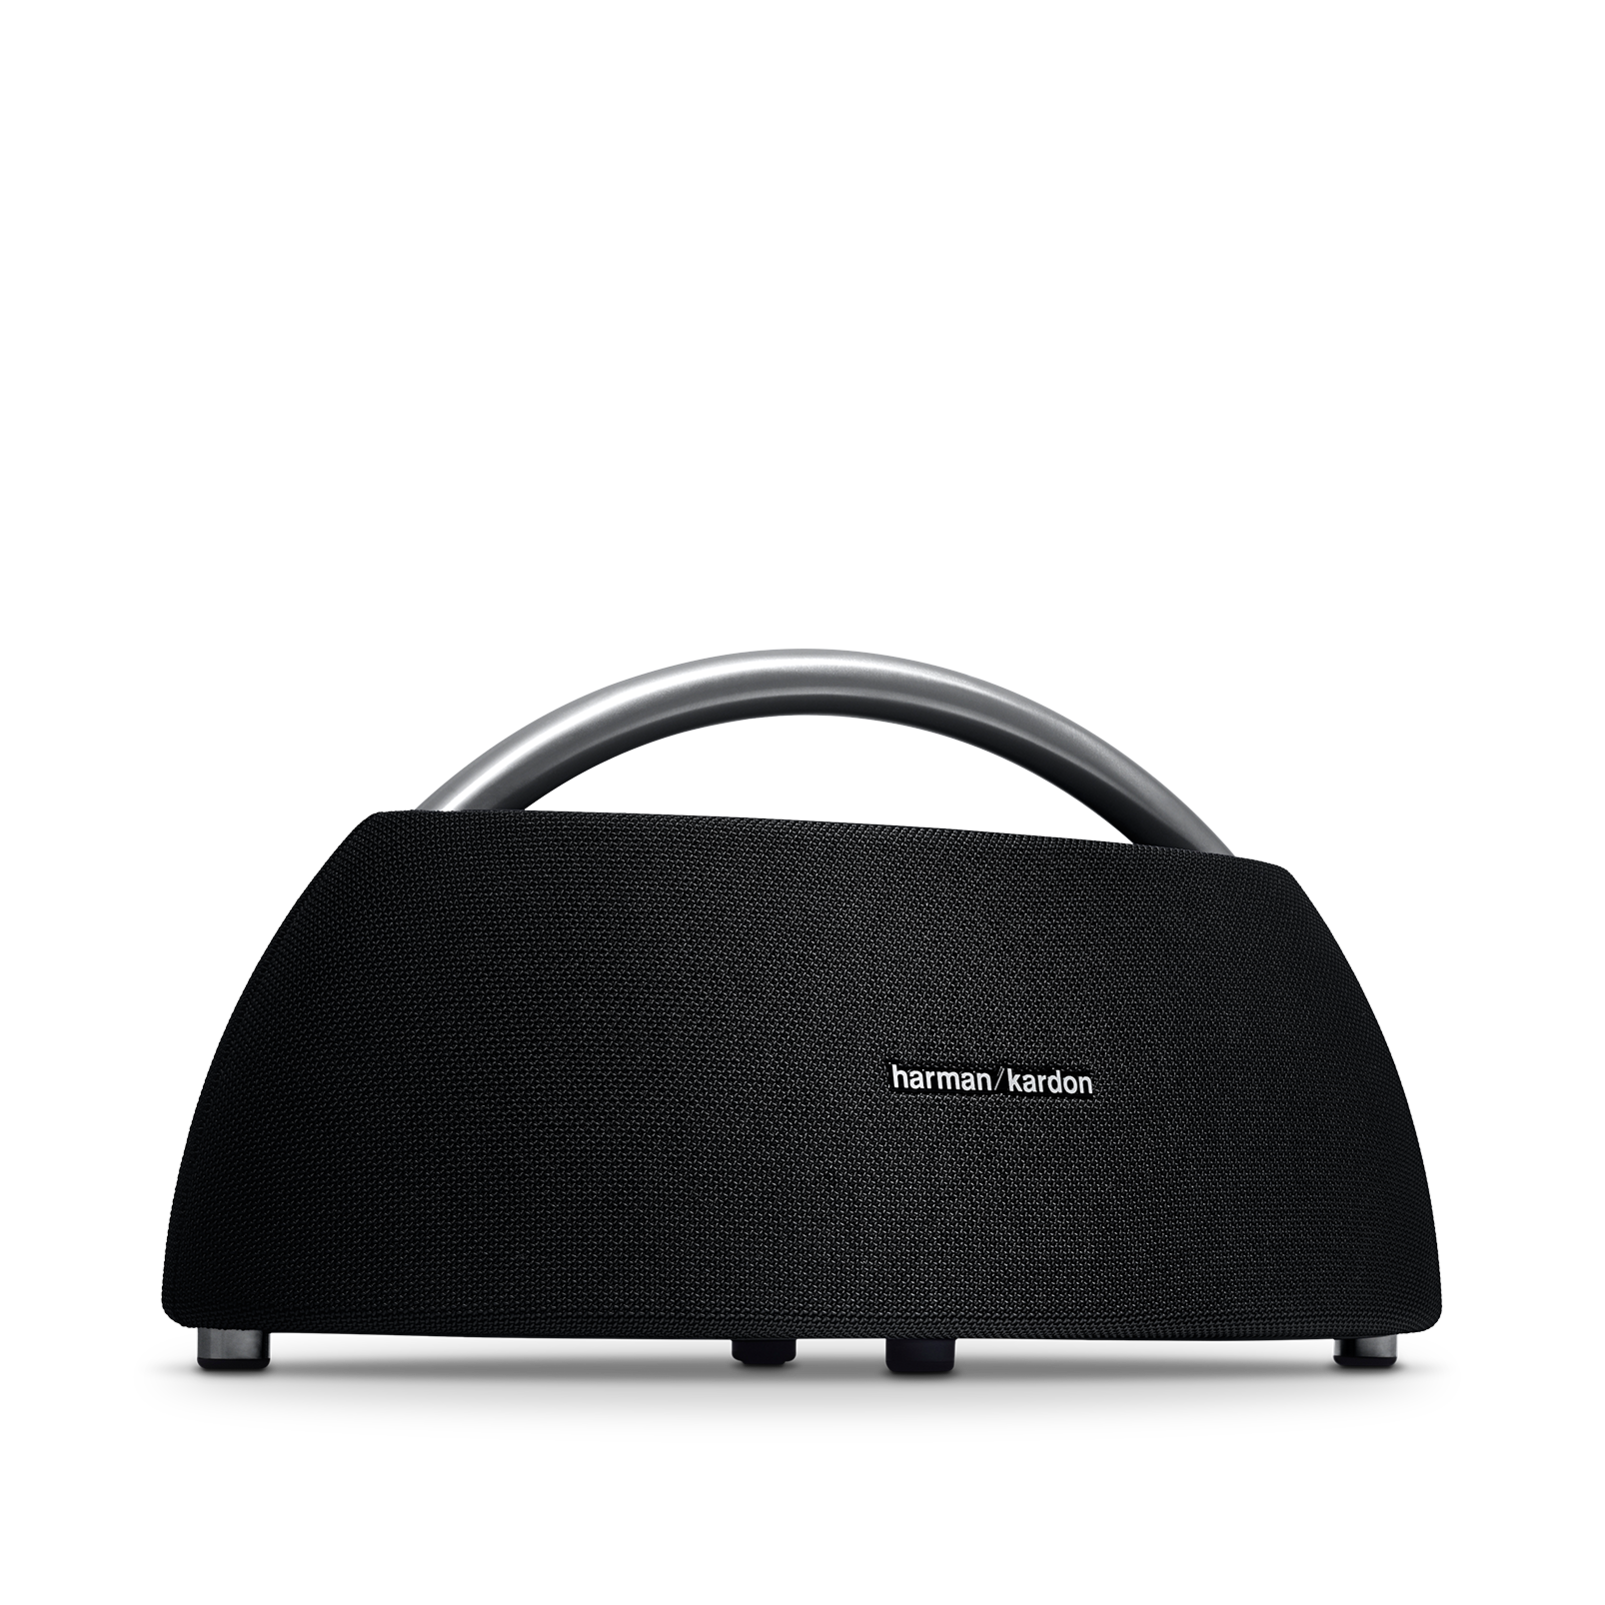 NEW In Box Harman Kardon GO+Play Black Portable Bluetooth Speaker 